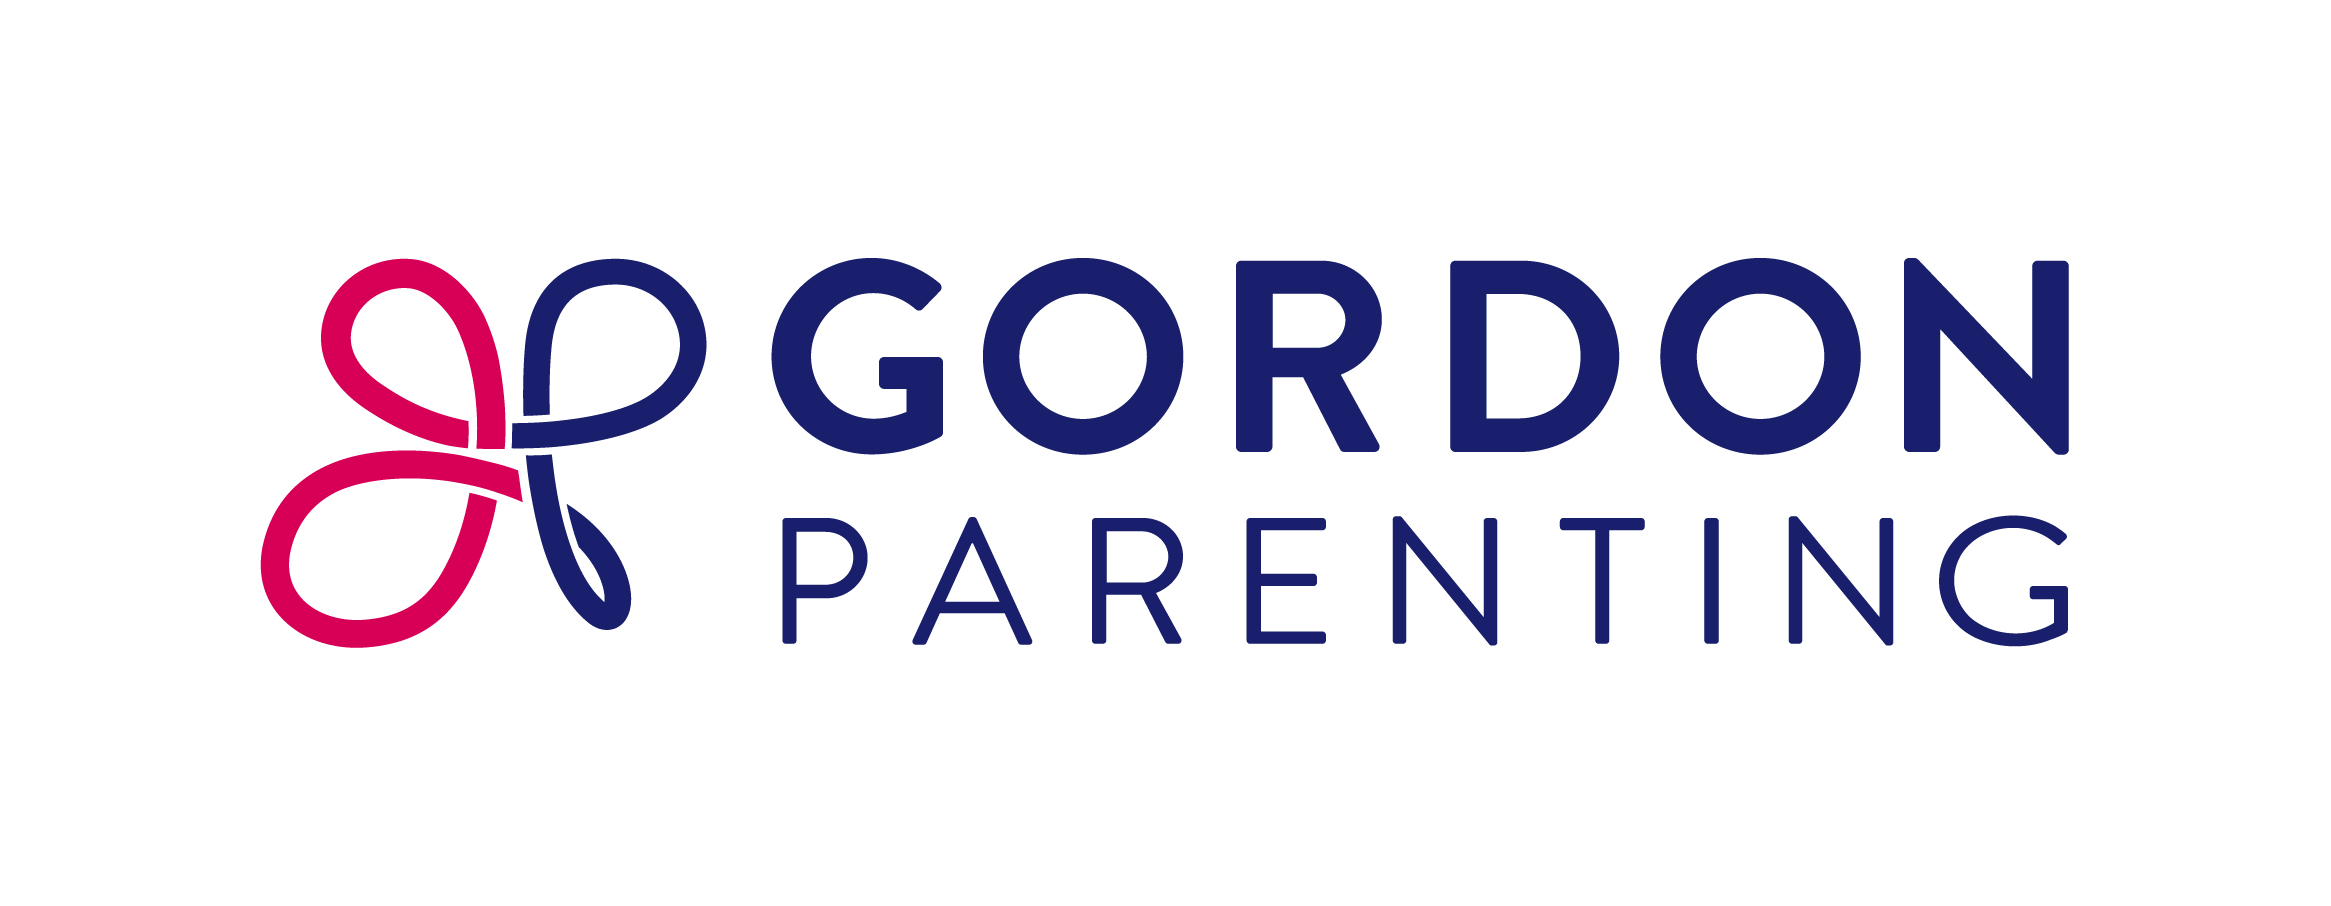 Gordon Parenting logo_OP-02